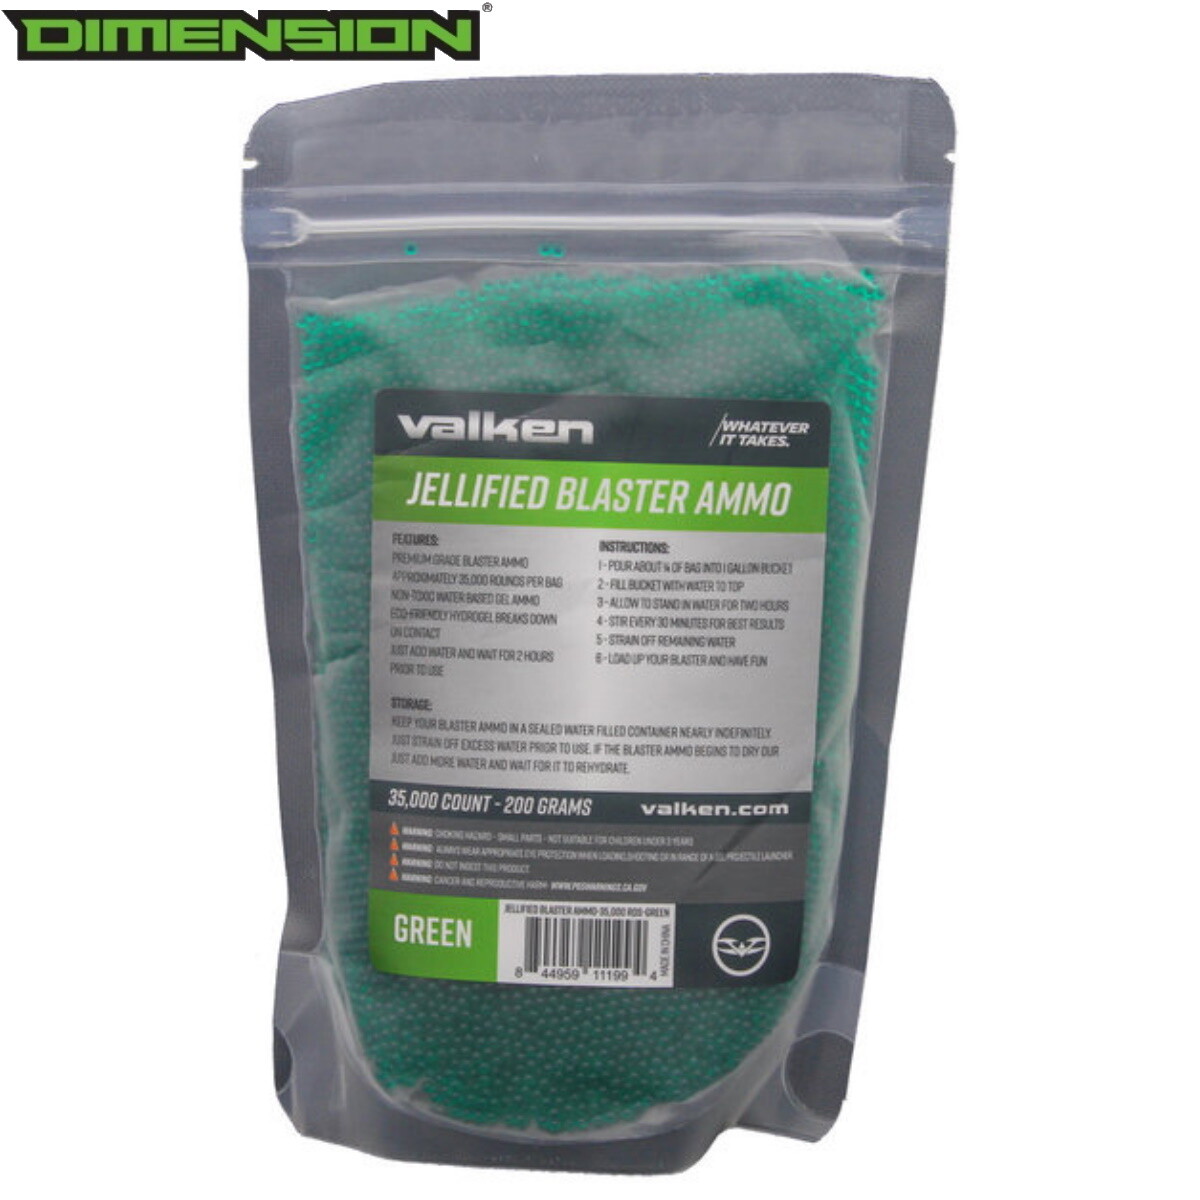 Valken Jellified Blaster Ammo -35,000rds - Green